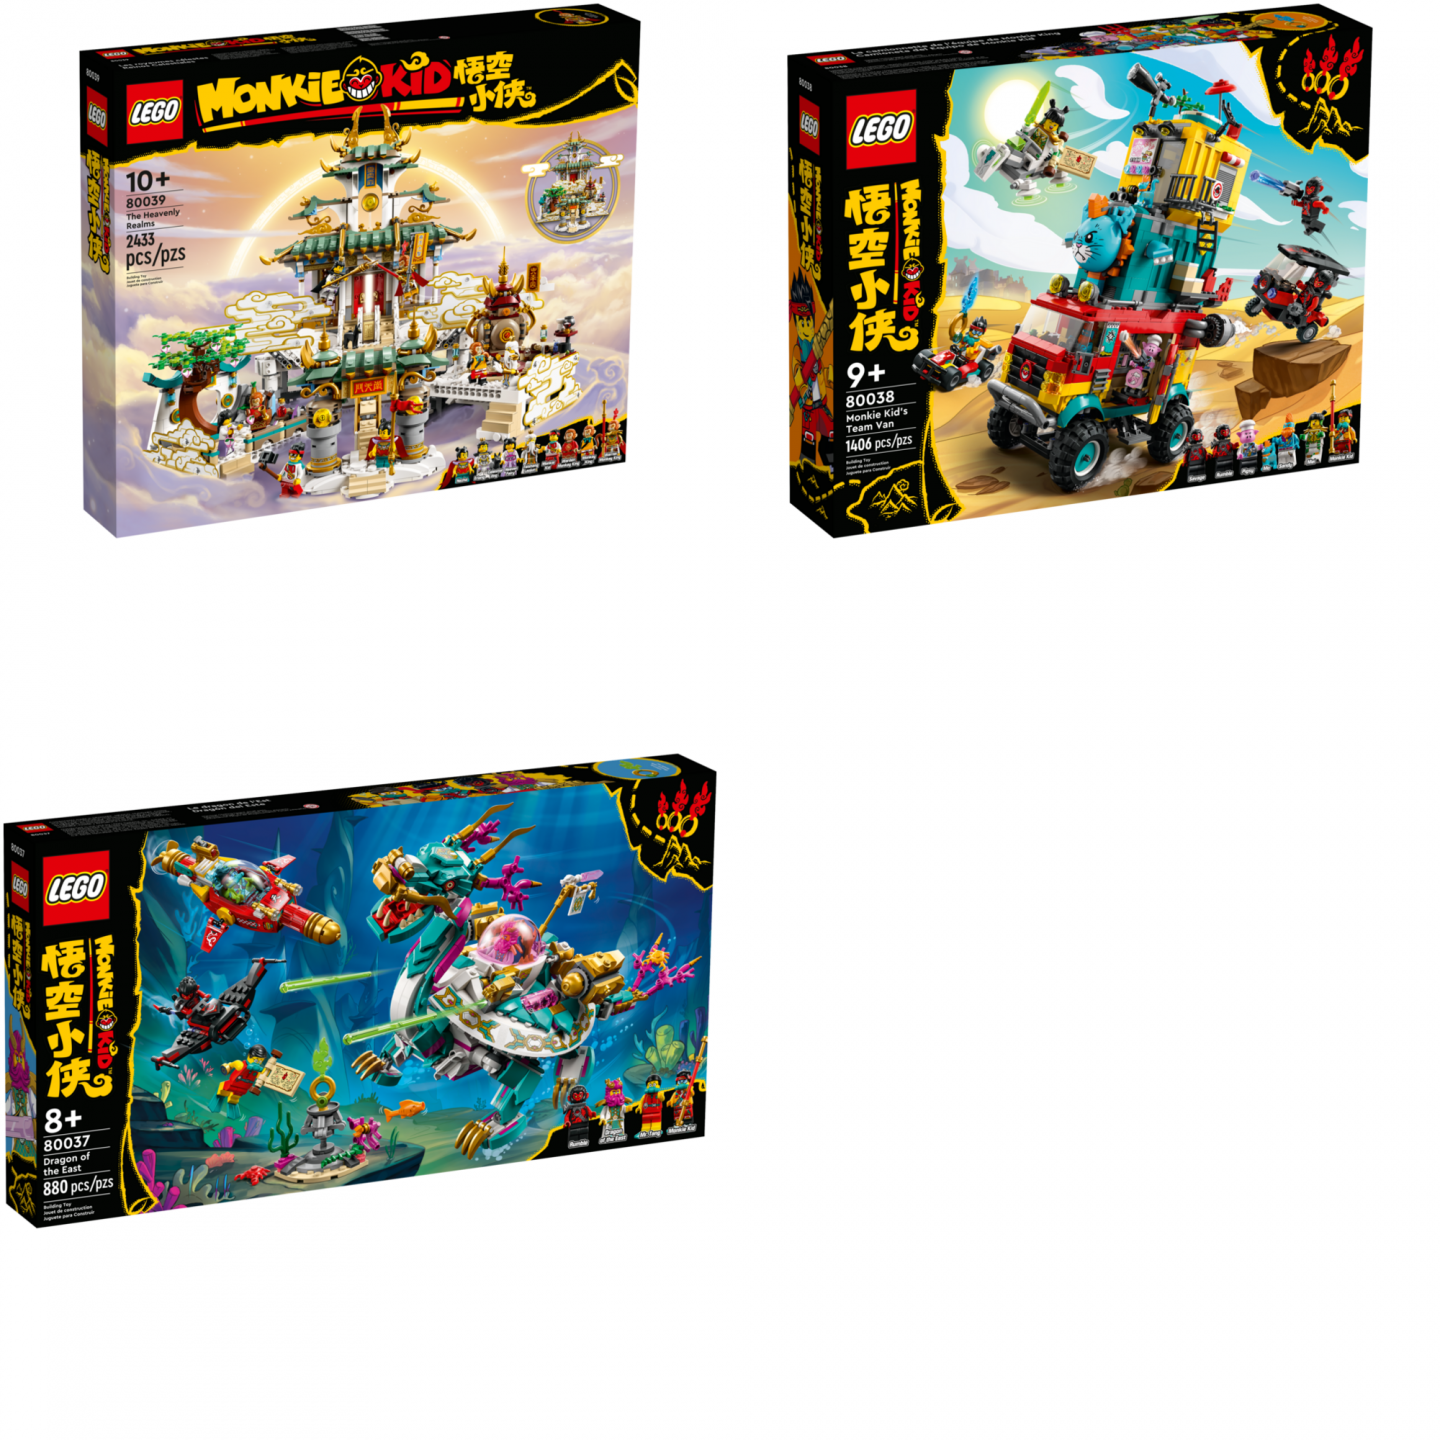 LEGO Sets added on 2022-05-11